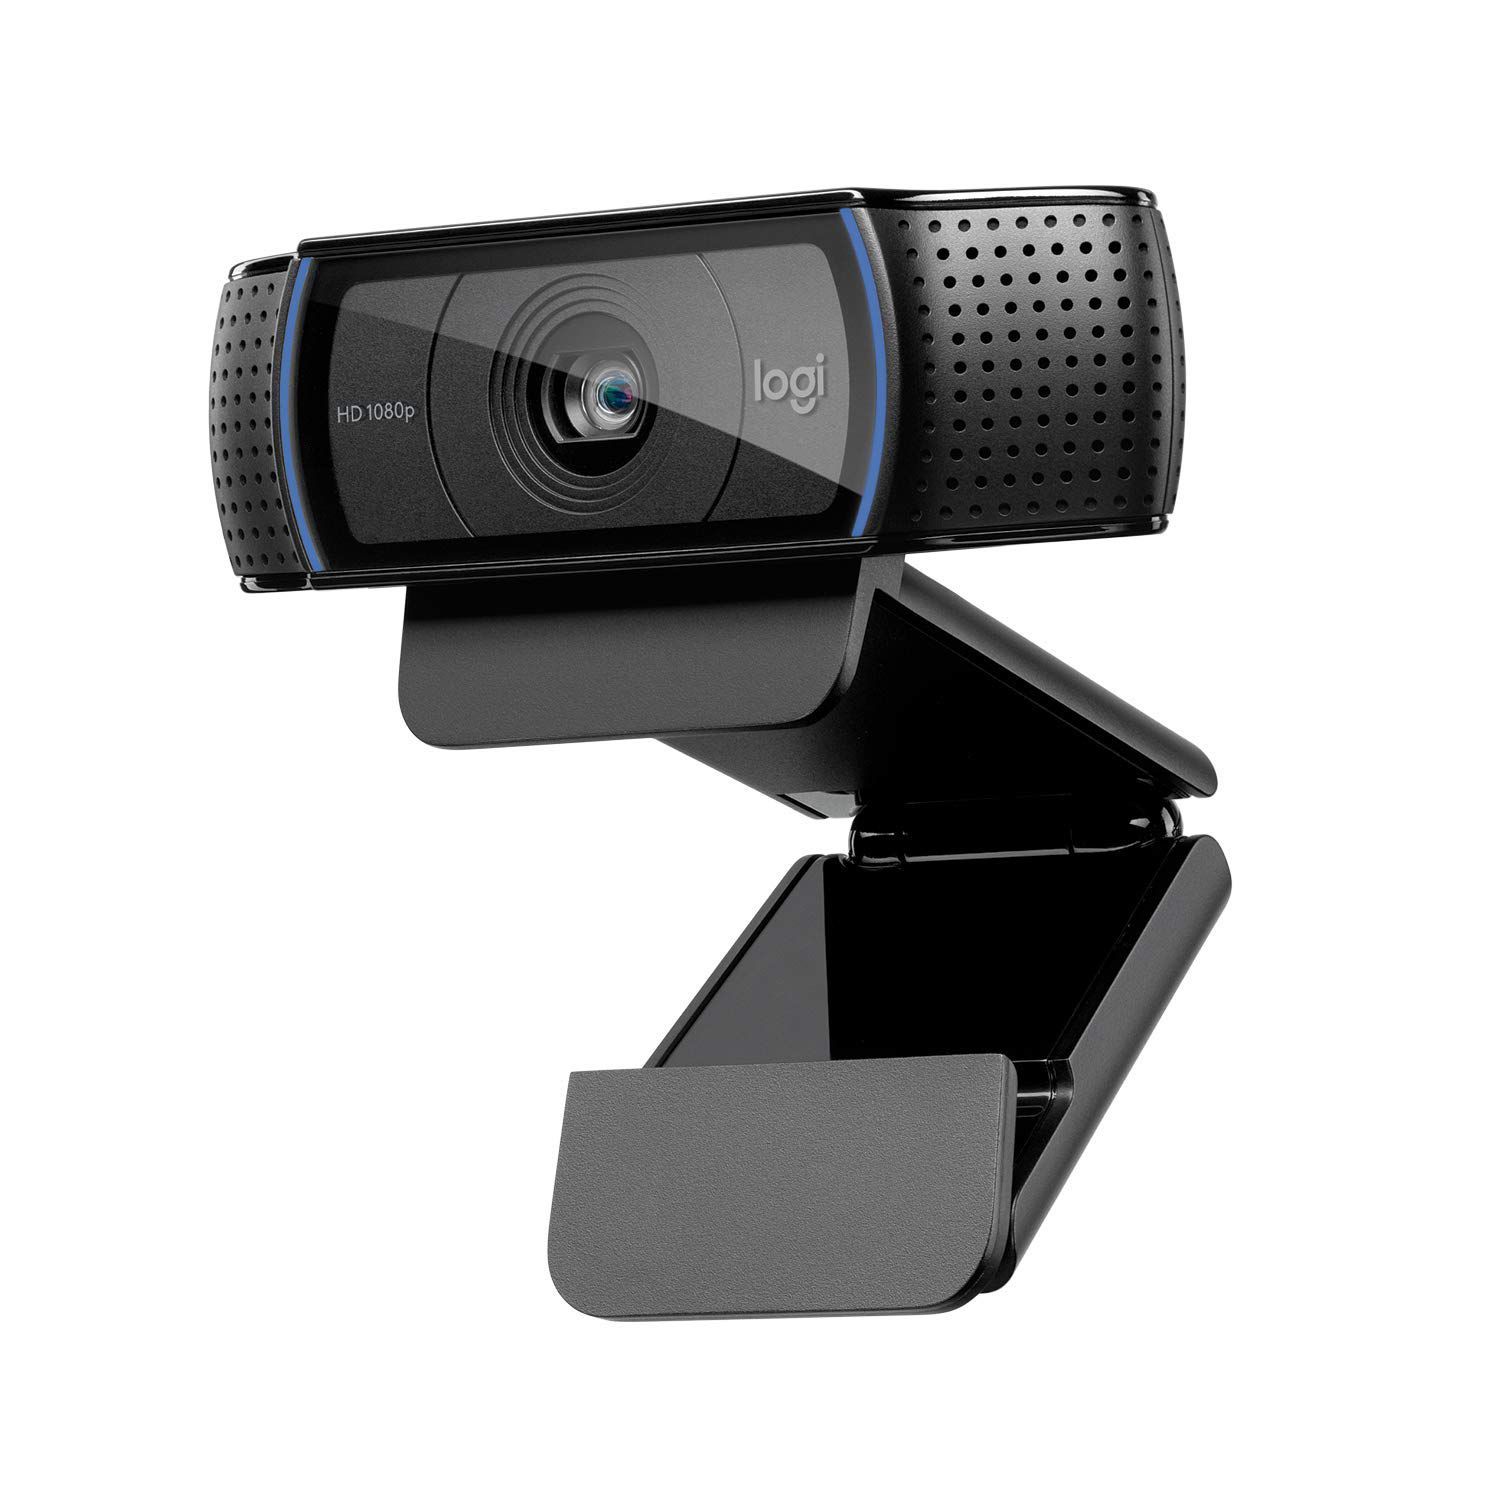 Logitech C920 PRO HD webcam 3 MP 1920 x 1080 pixels USB 2.0 Black